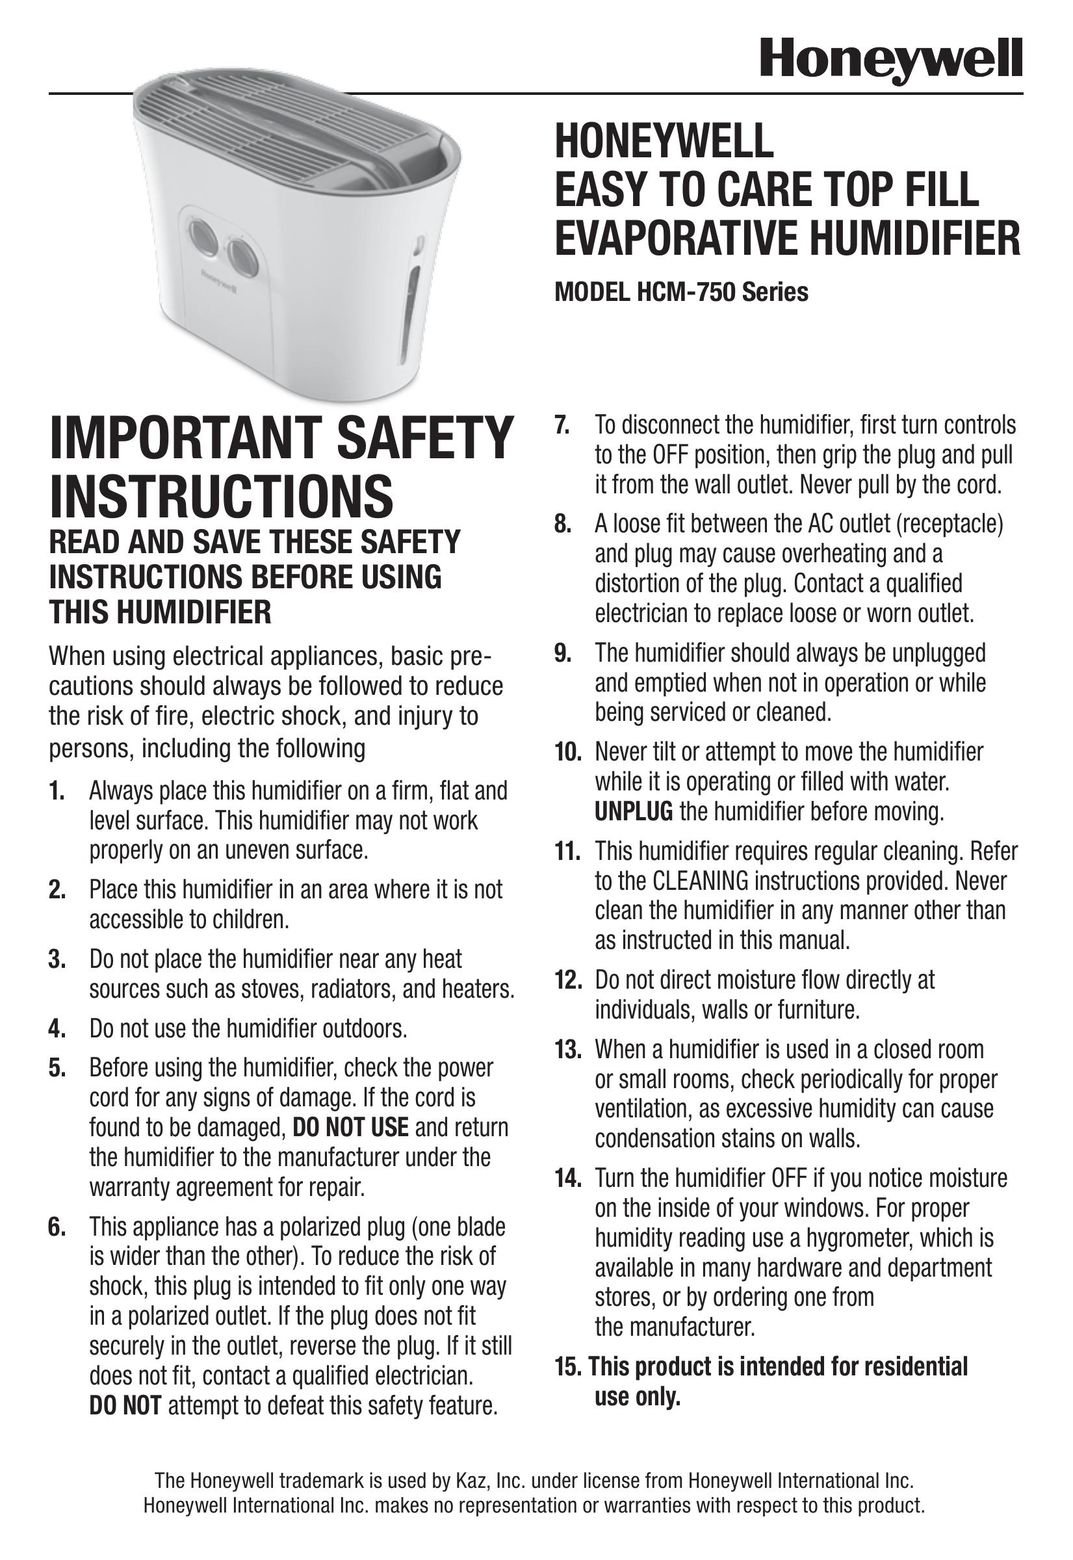 Honeywell HCM-750 Humidifier User Manual